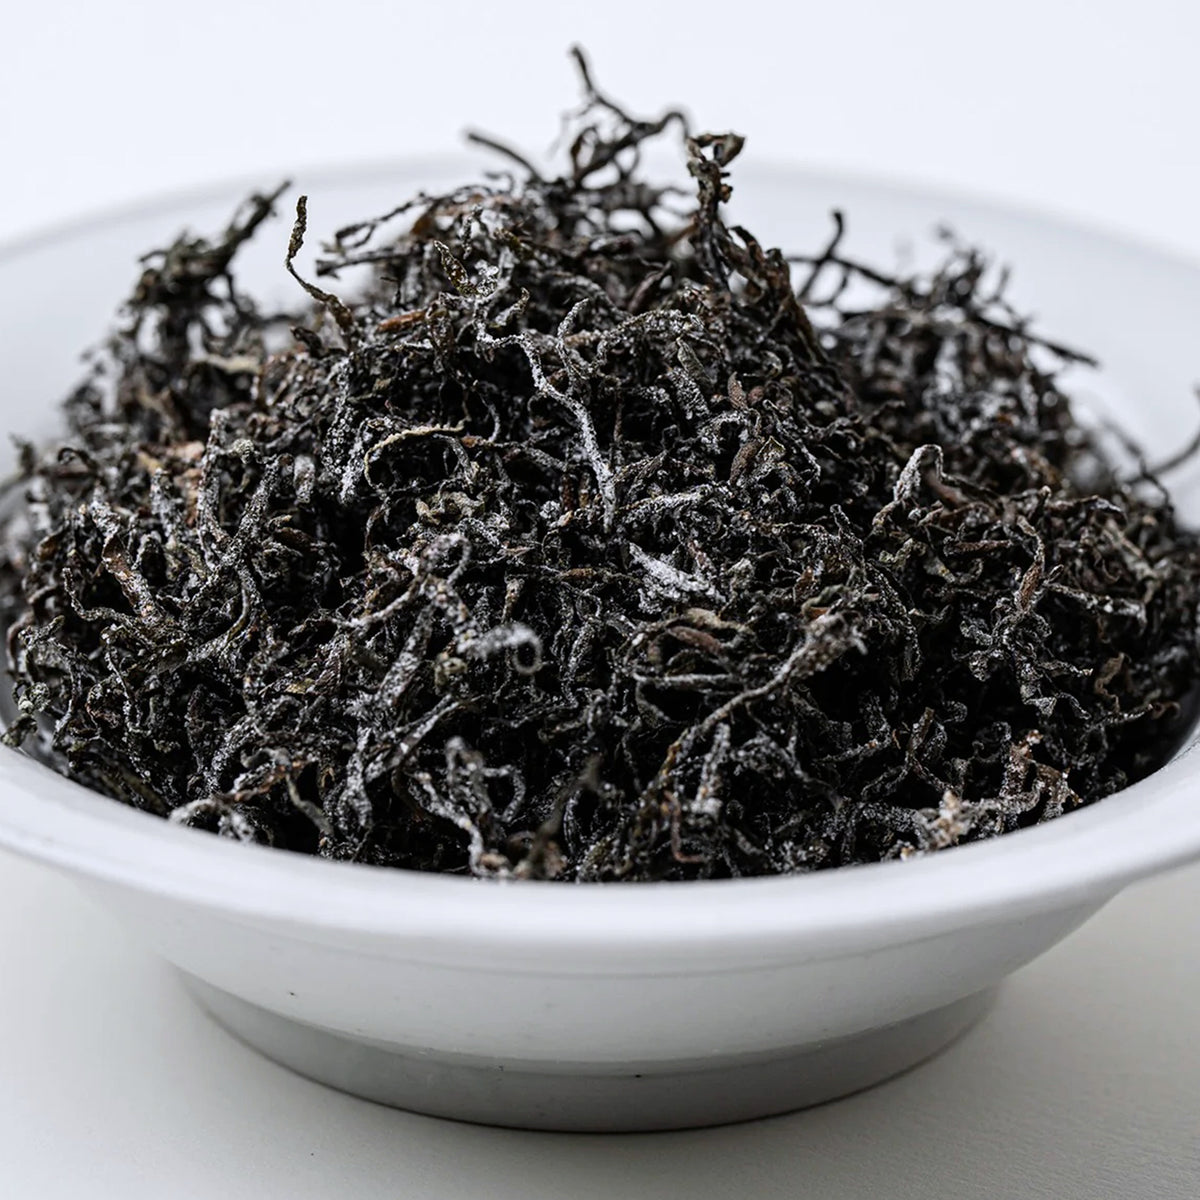 All-Natural Additive-Free Premium Dried "Hijiki" Seaweed from Japan (40g x 2) - Horizon Farms